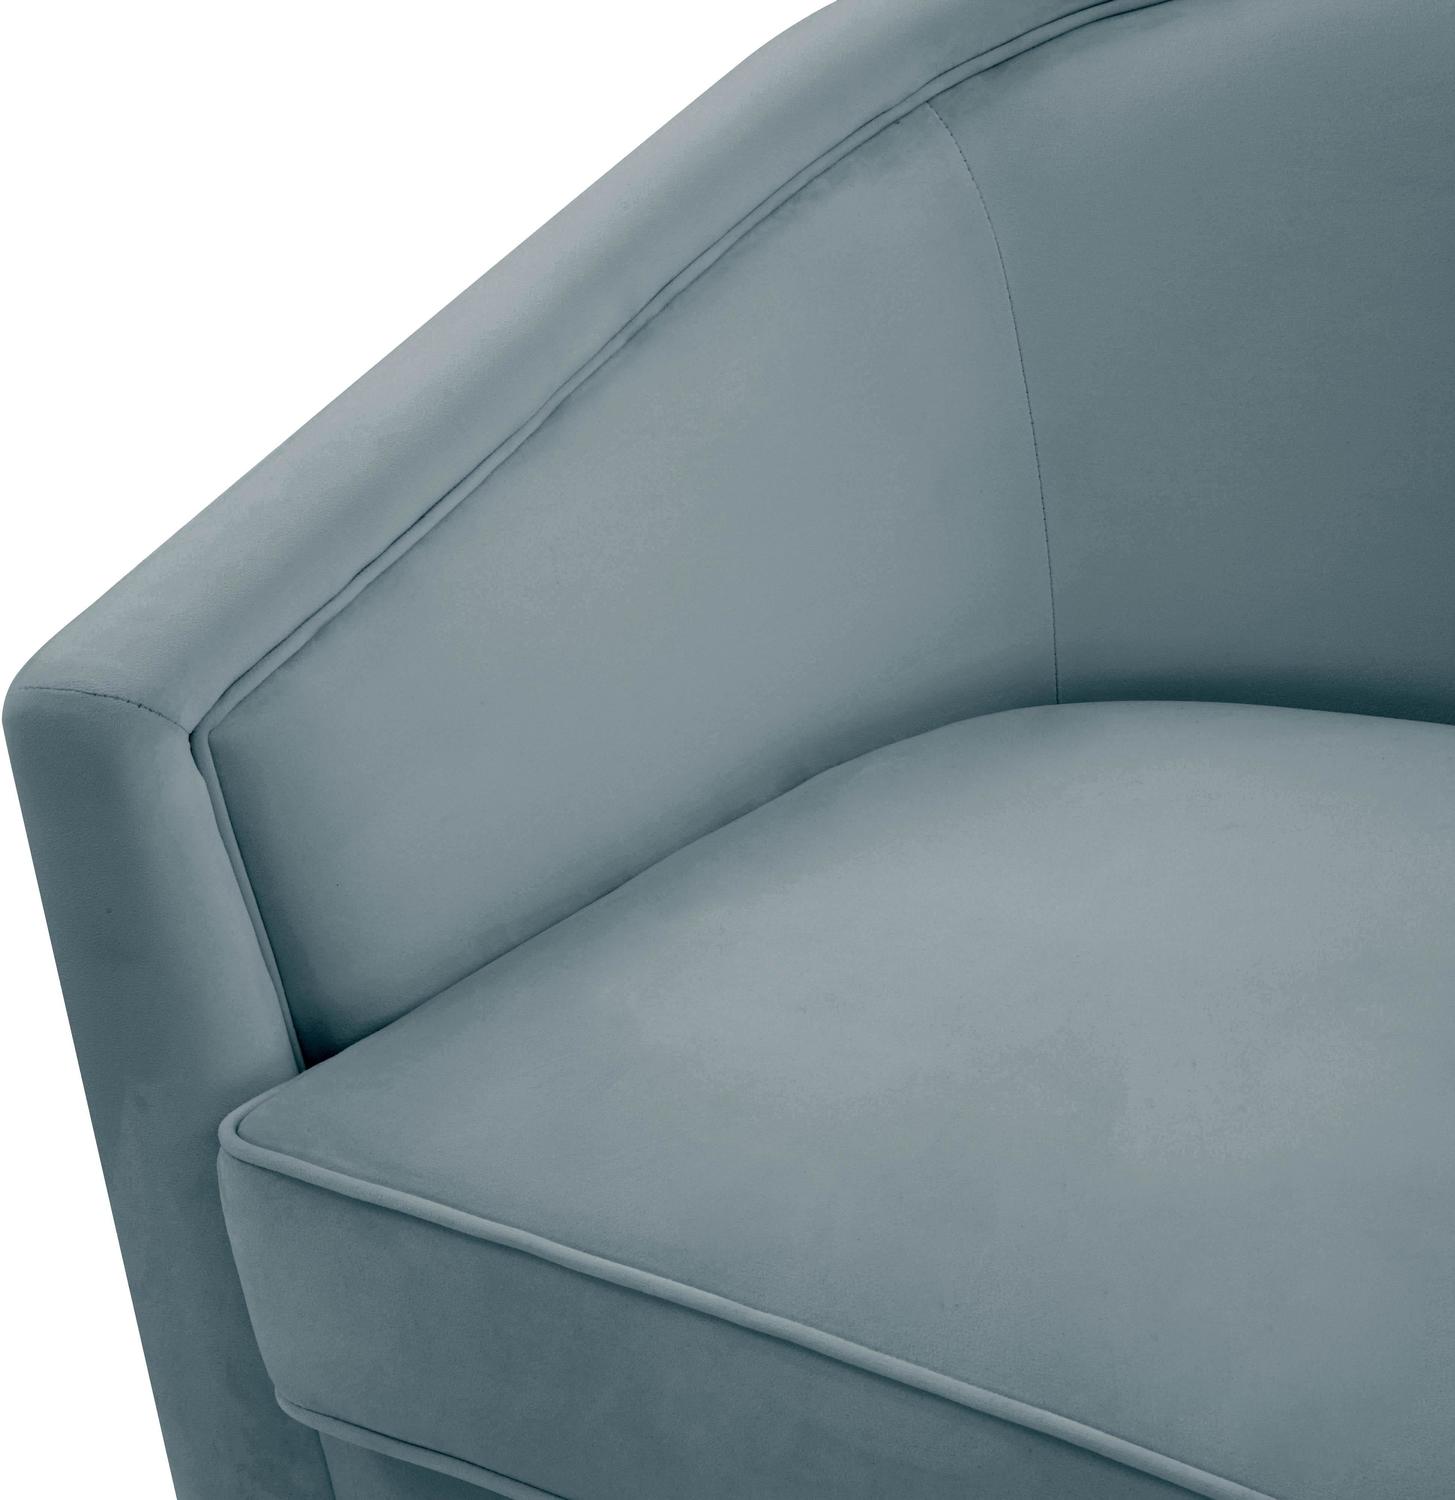 statement arm chair Contemporary Design Furniture Accent Chairs Bluestone